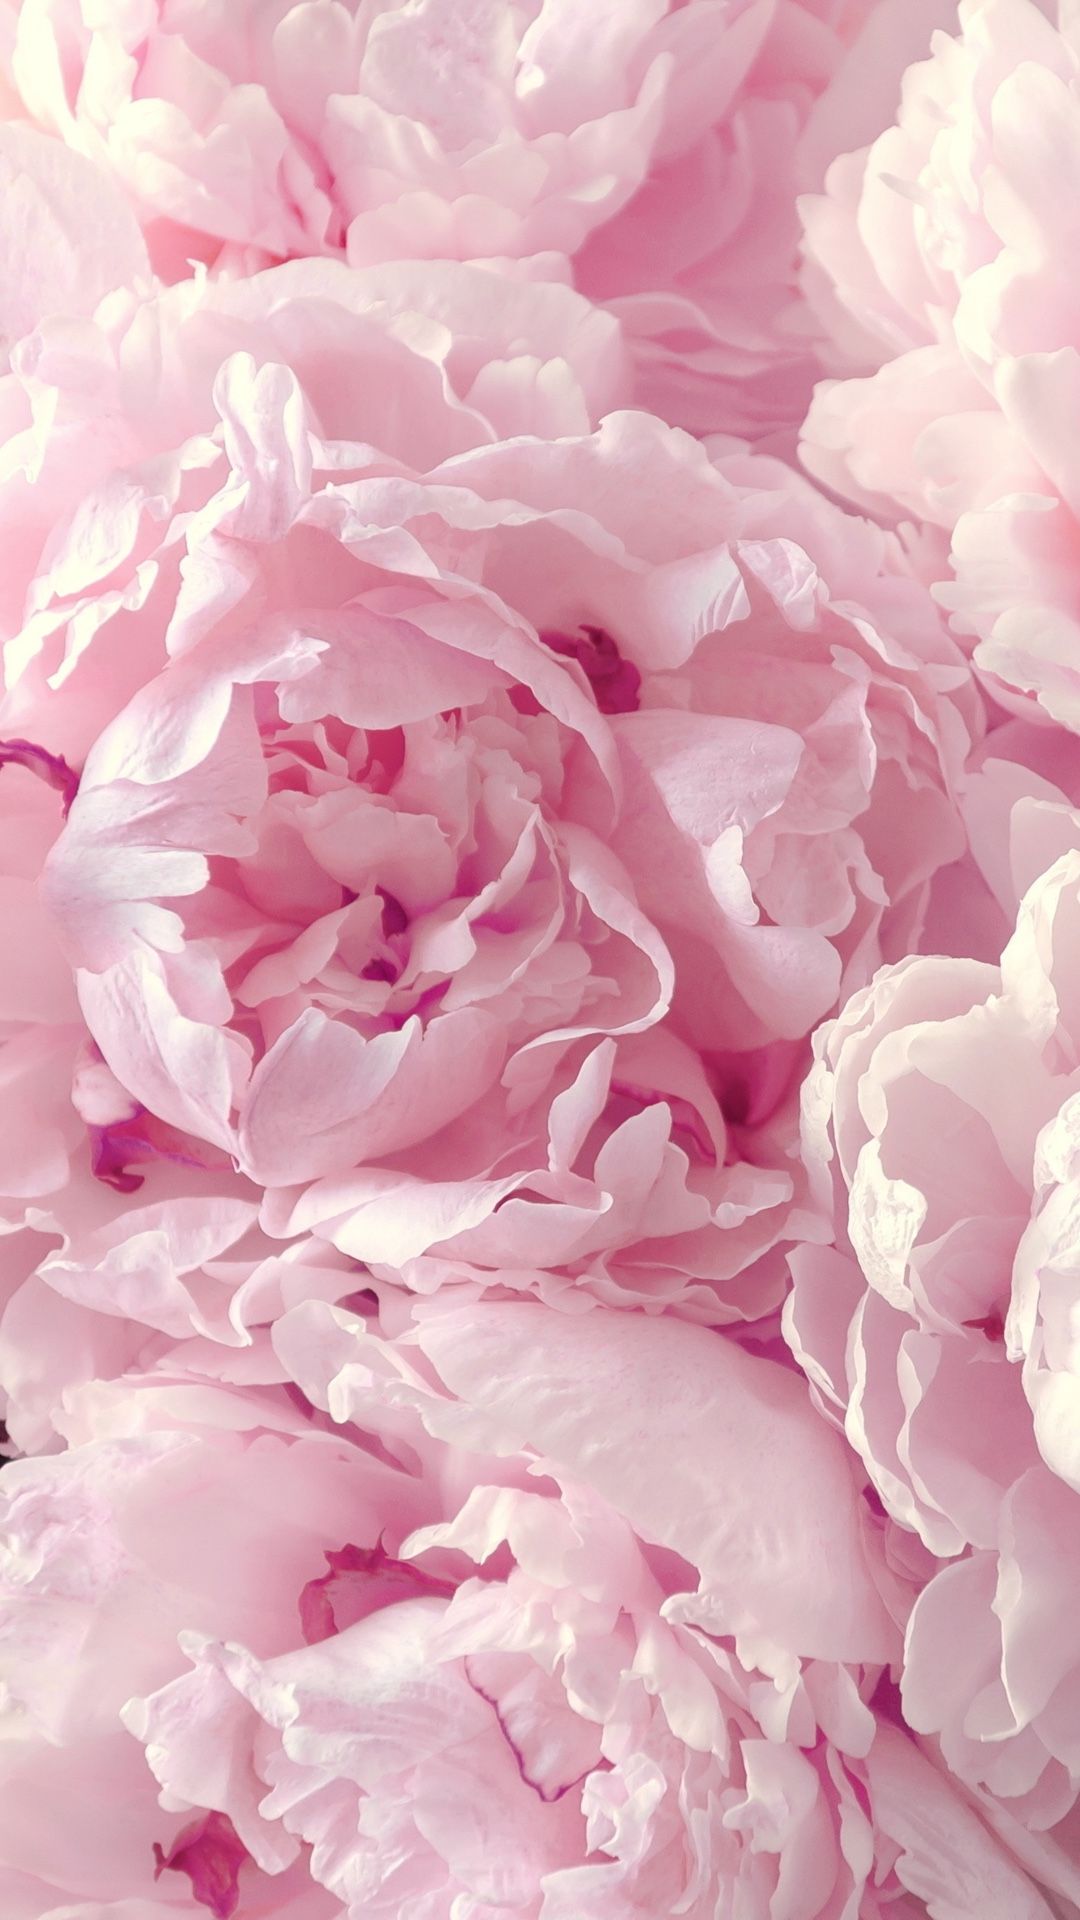 dulce papel tapiz de flores,rosado,pétalo,flor,peonía común,peonía